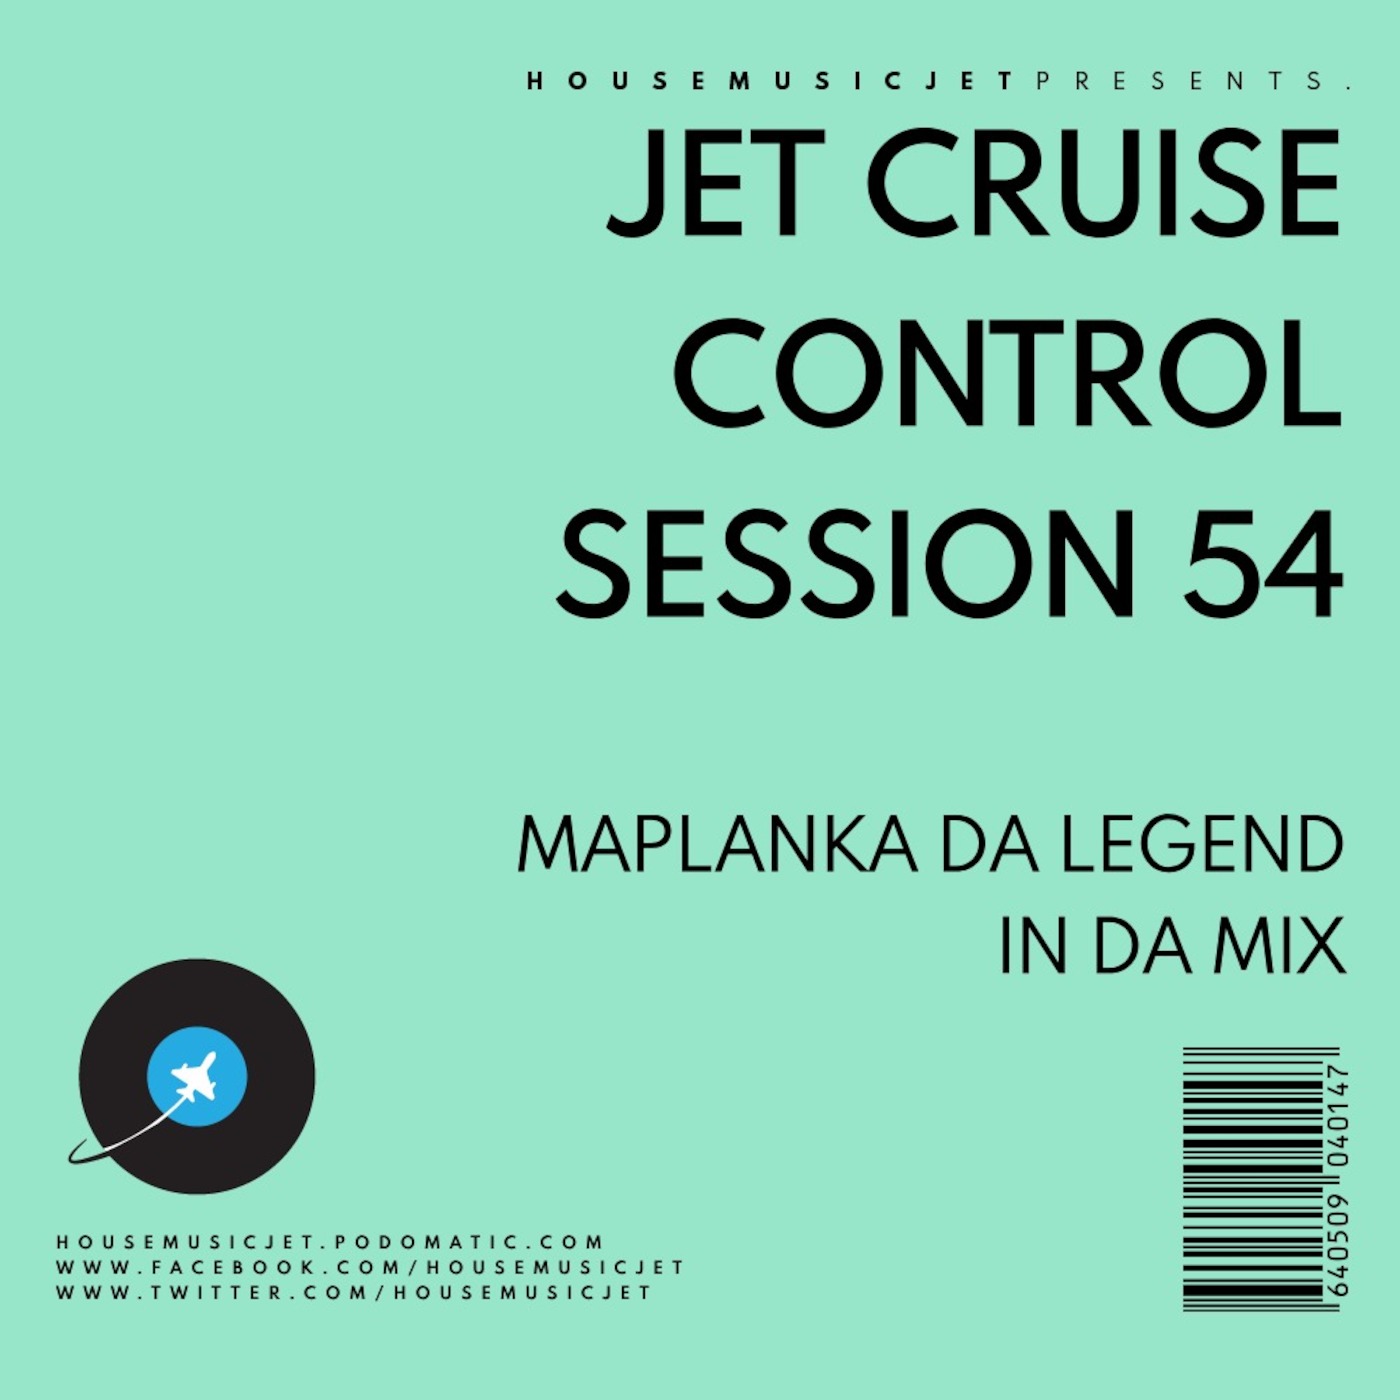 Maplanka Da Legend In Da Mix – Jet Cruise Control Session 54